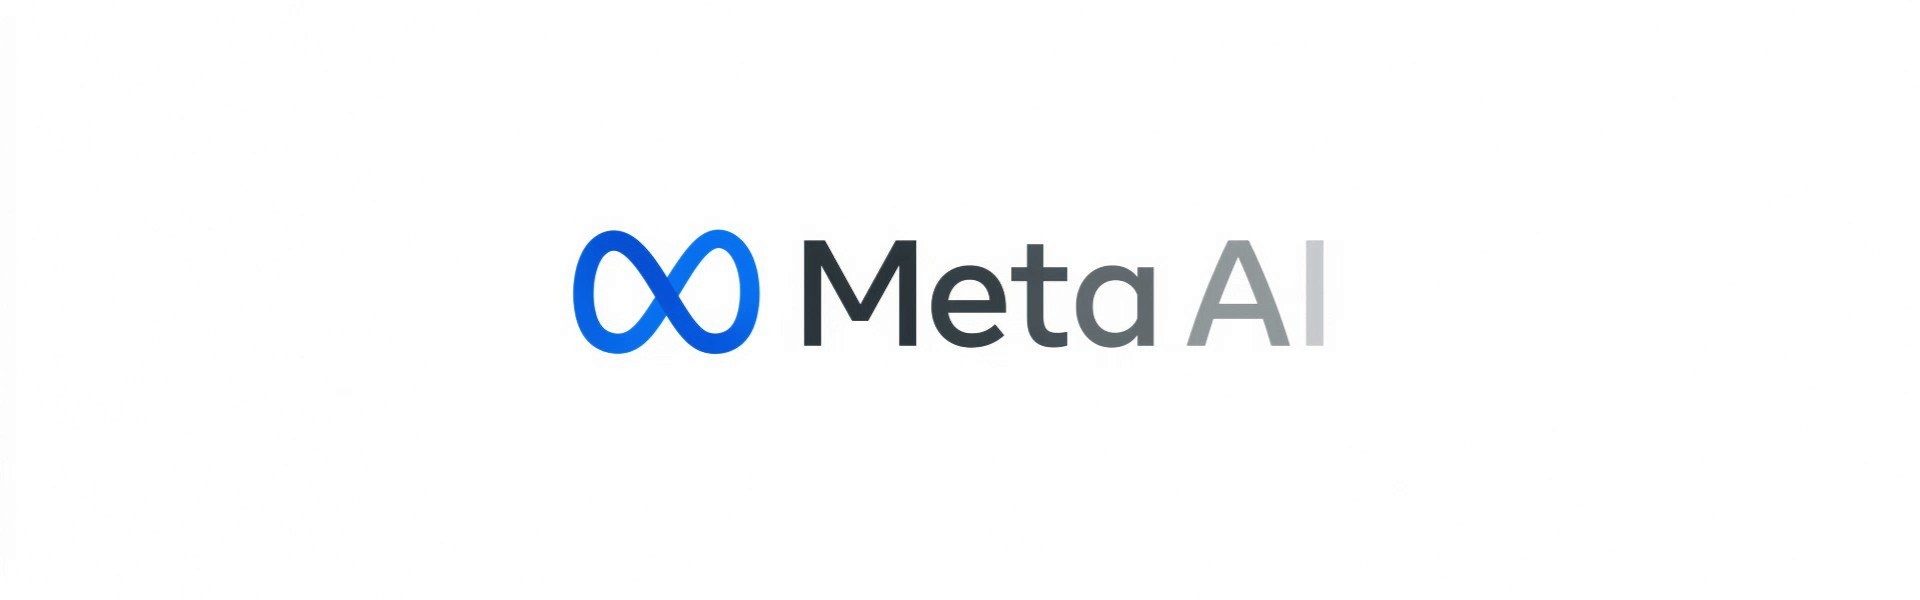 Aumentan ganancias de Meta tras anunciar implementación de IA